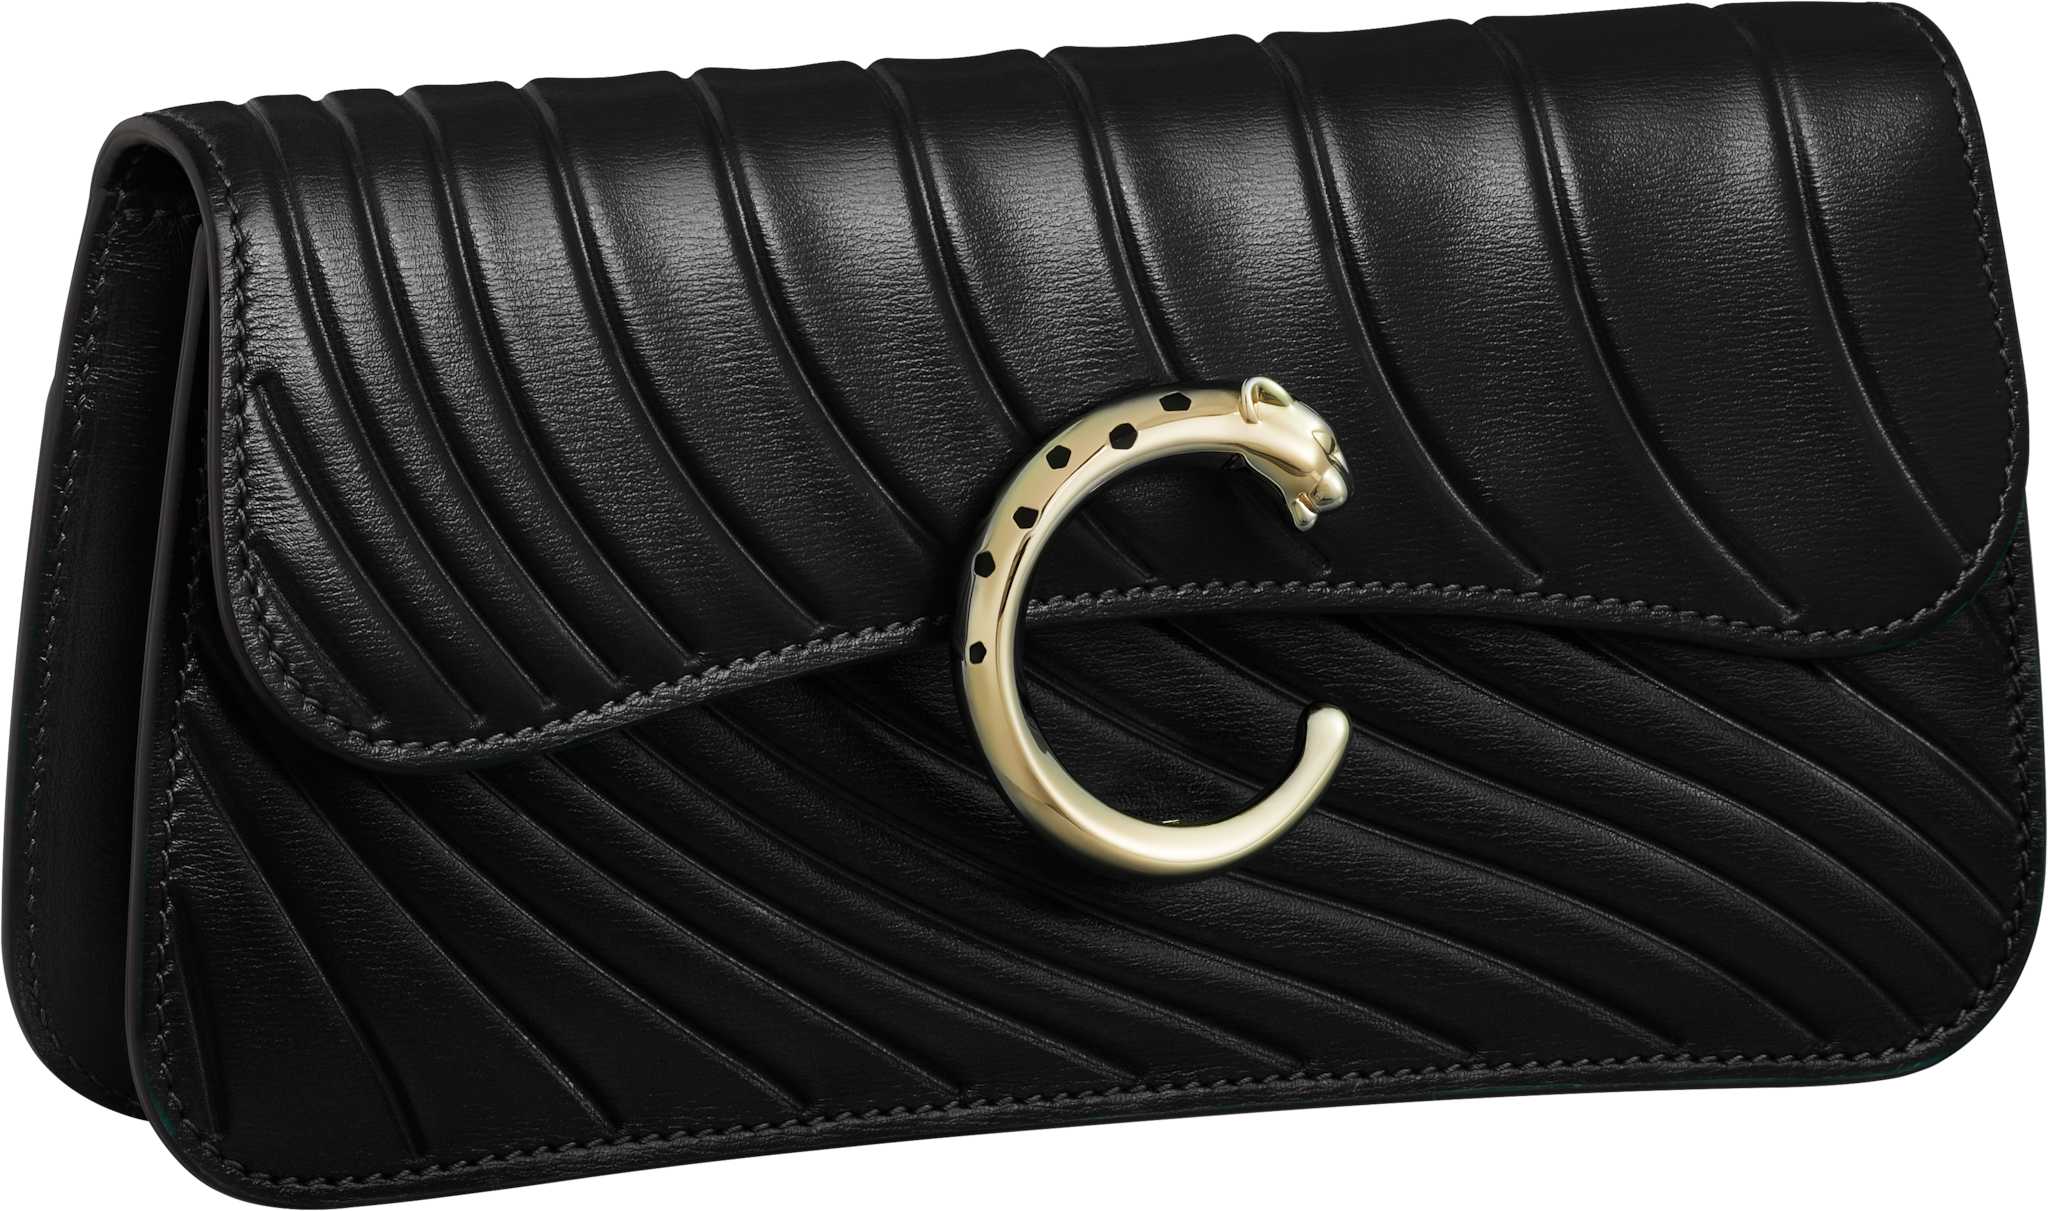 Chain bag mini, Panthère de CartierBlack calfskin, embossed Cartier signature motif, golden finish